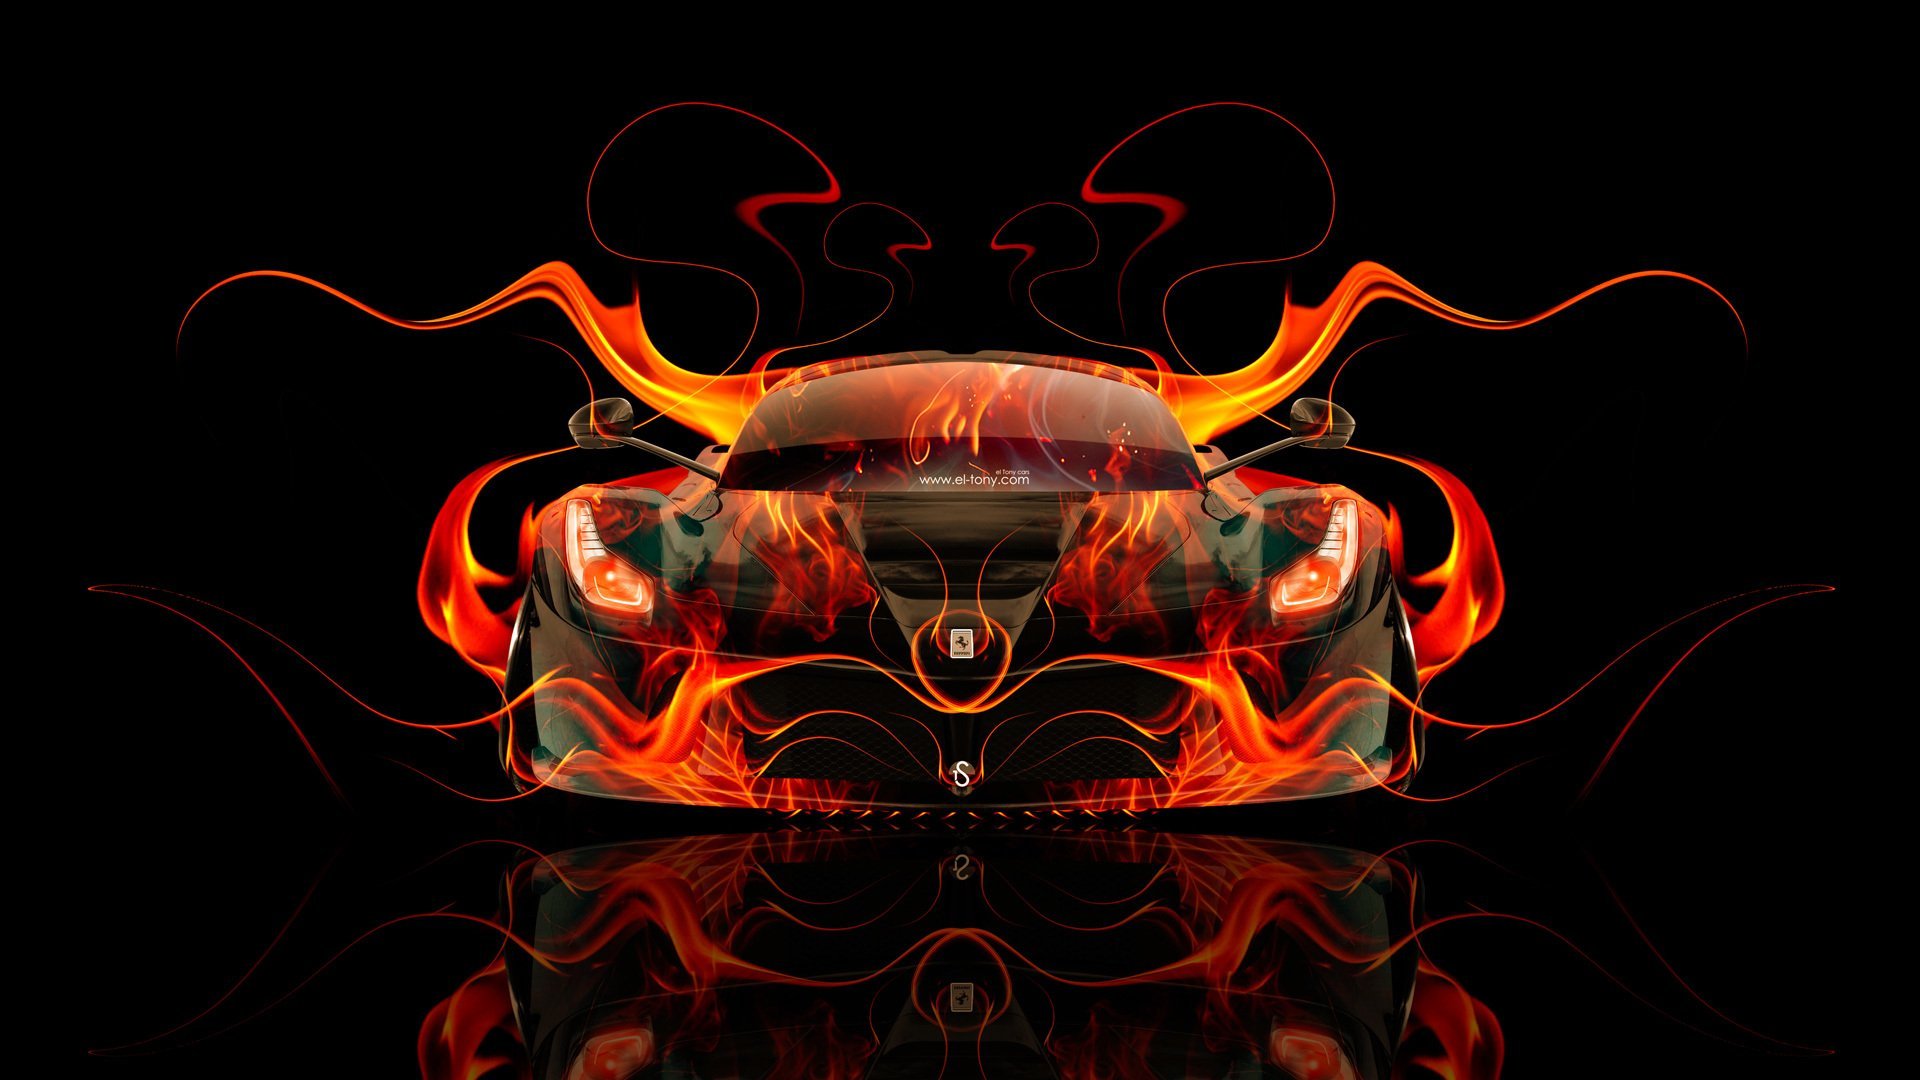 Tony Kokhan Ferrari Laferrari Fire Car Orange Black Abstract